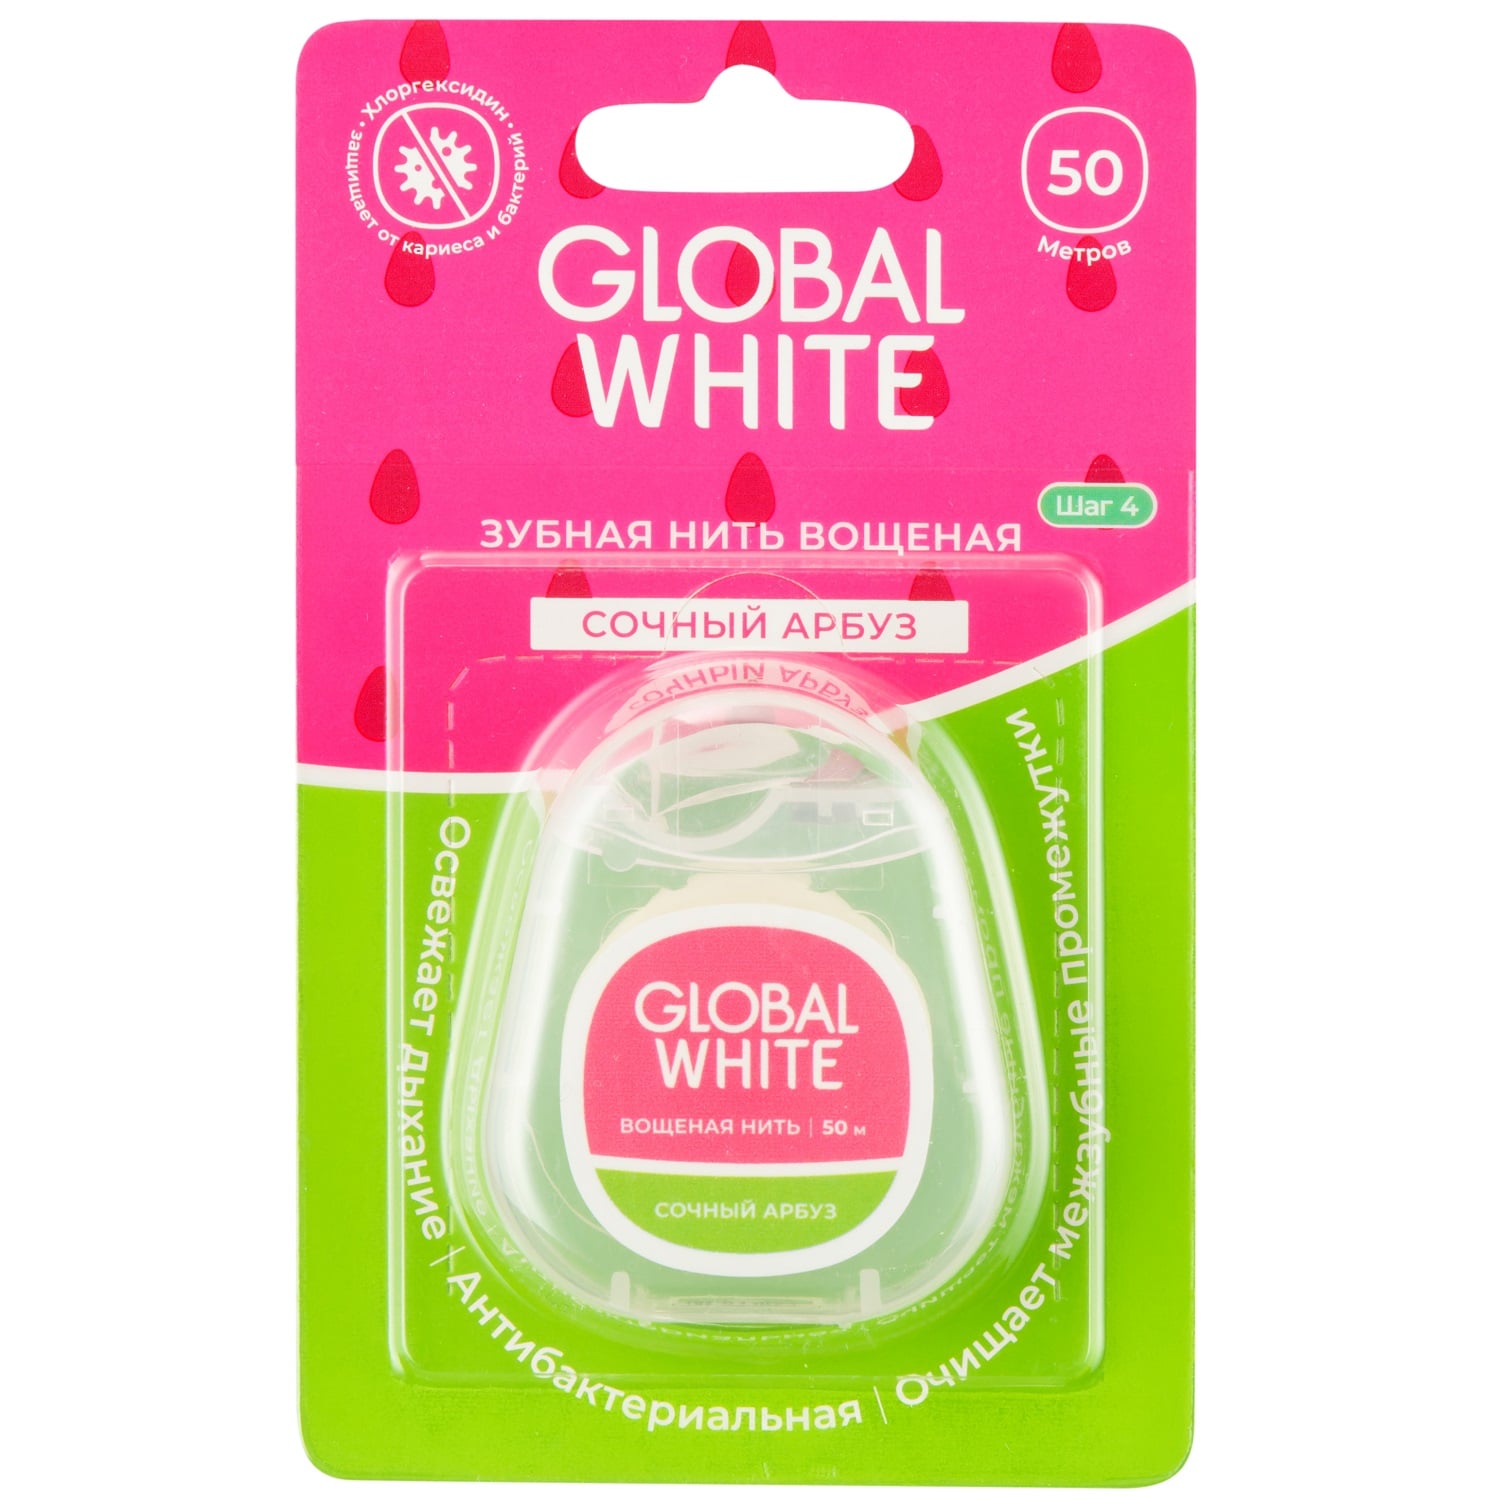 Global White Вощеная зубная нить Сочный арбуз с хлоргексидином, 50 м (Global White, Поддержание эффекта отбеливания) зубная нить с хлоргексидином 50м global white fresh mint 1 шт